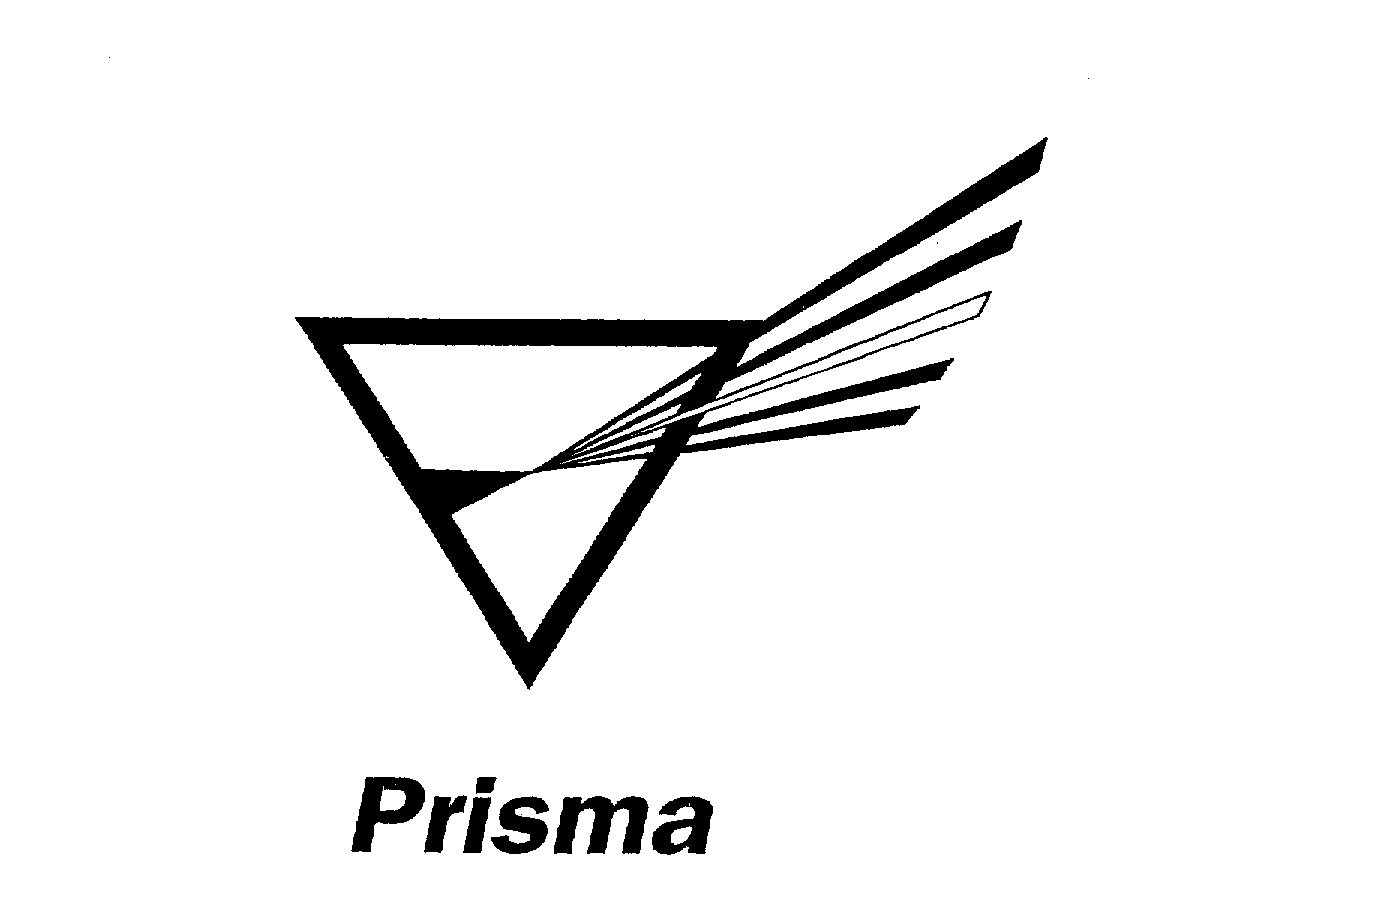  PRISMA